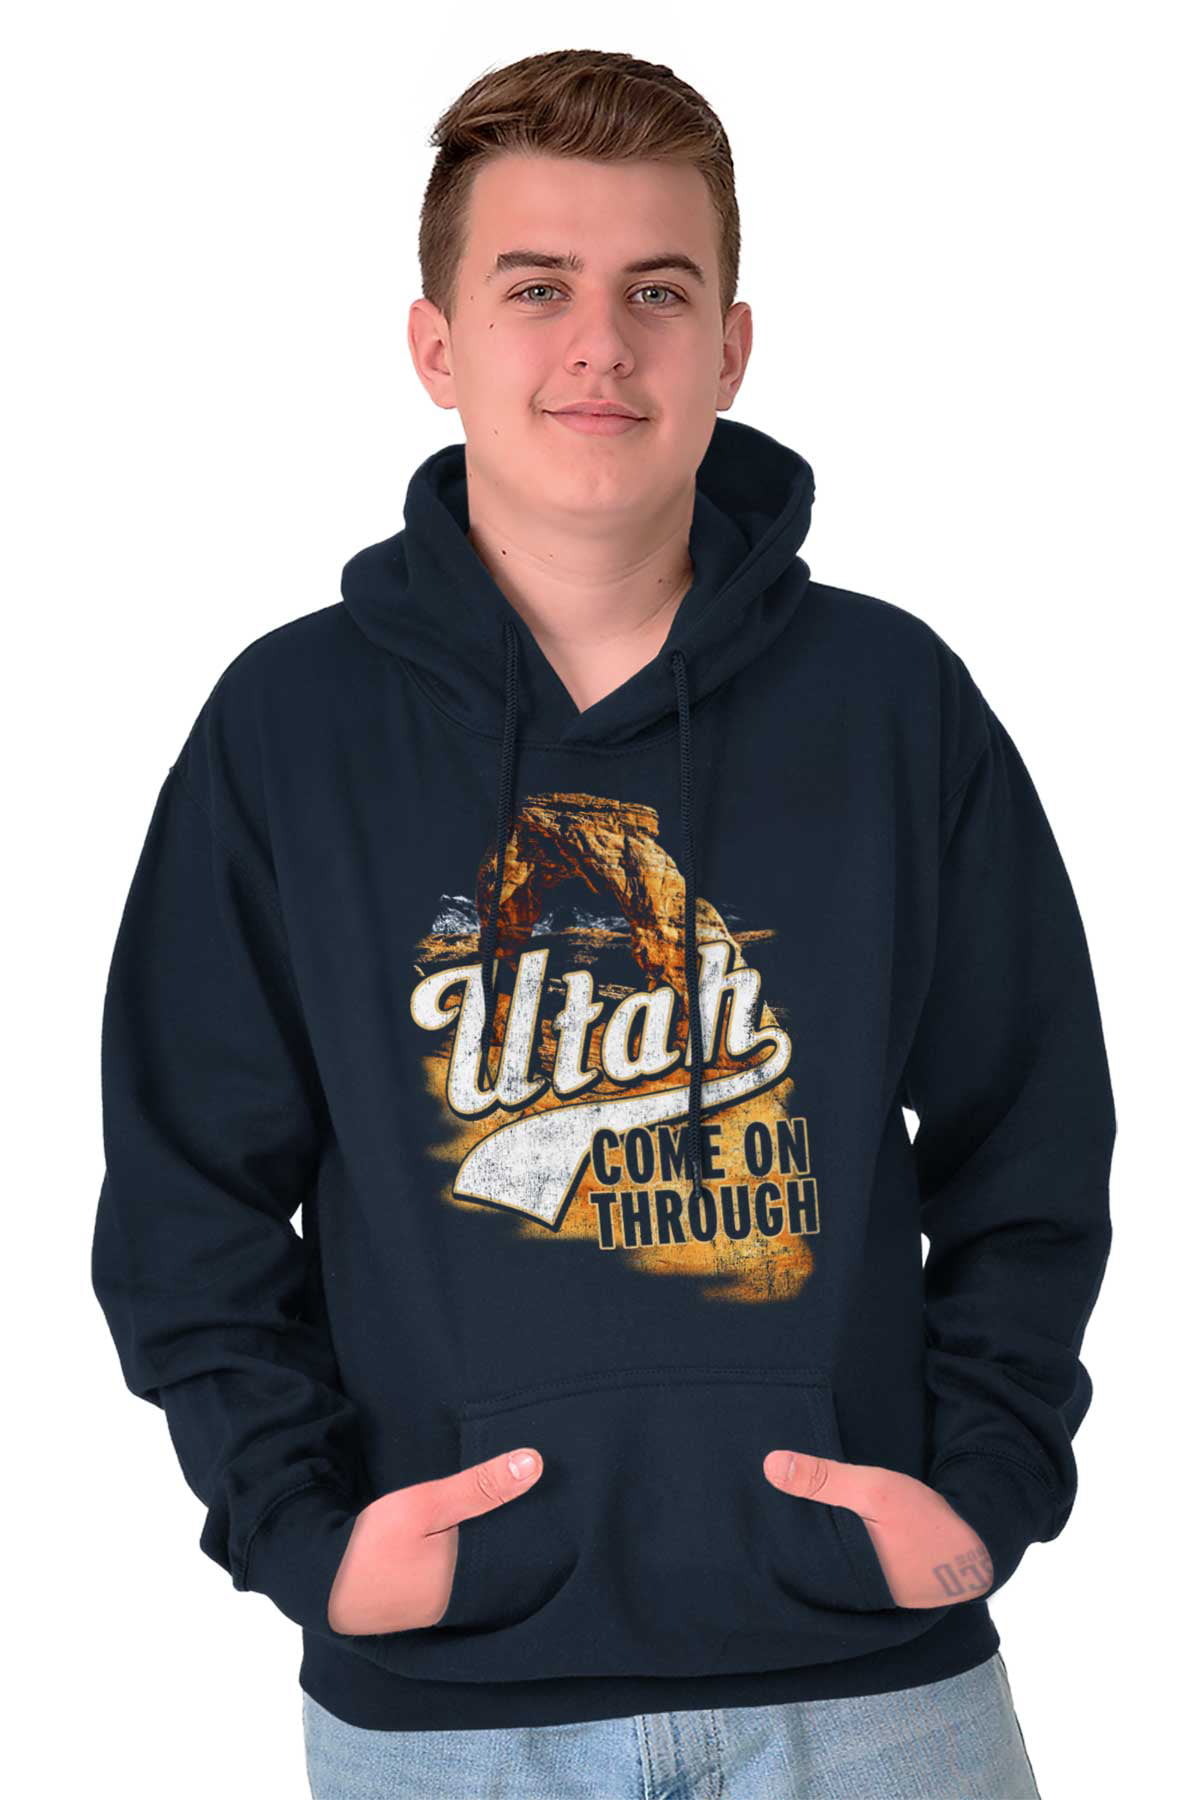 Utah American Souvenir Country UT USA Gift Hoodies Sweat Shirts Sweatshirts 